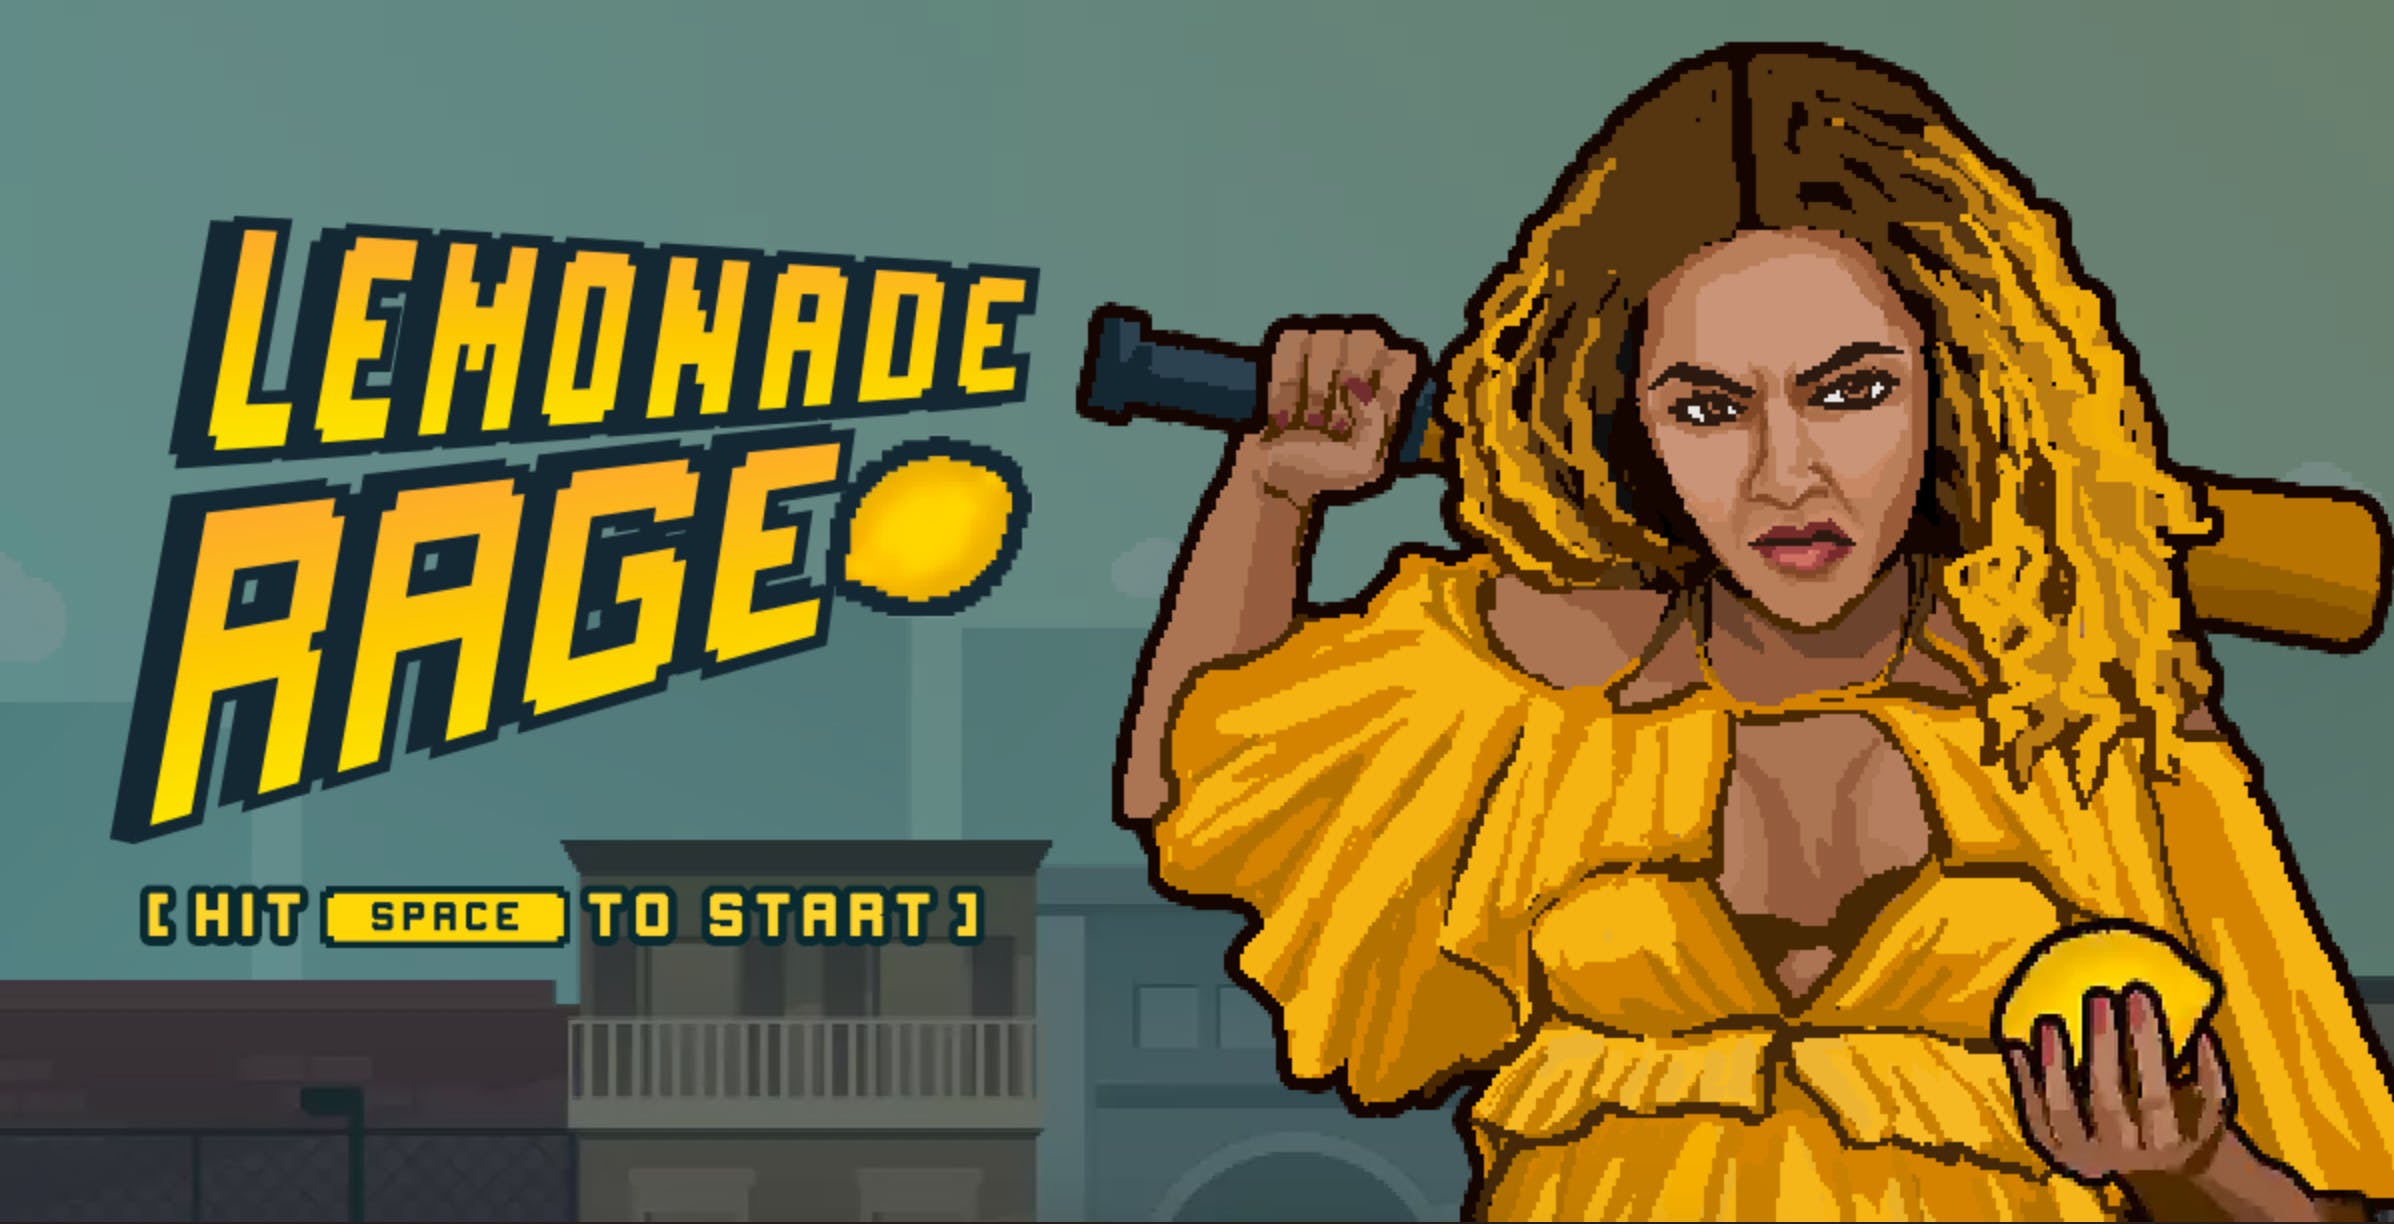 Lemonade Rage media 3